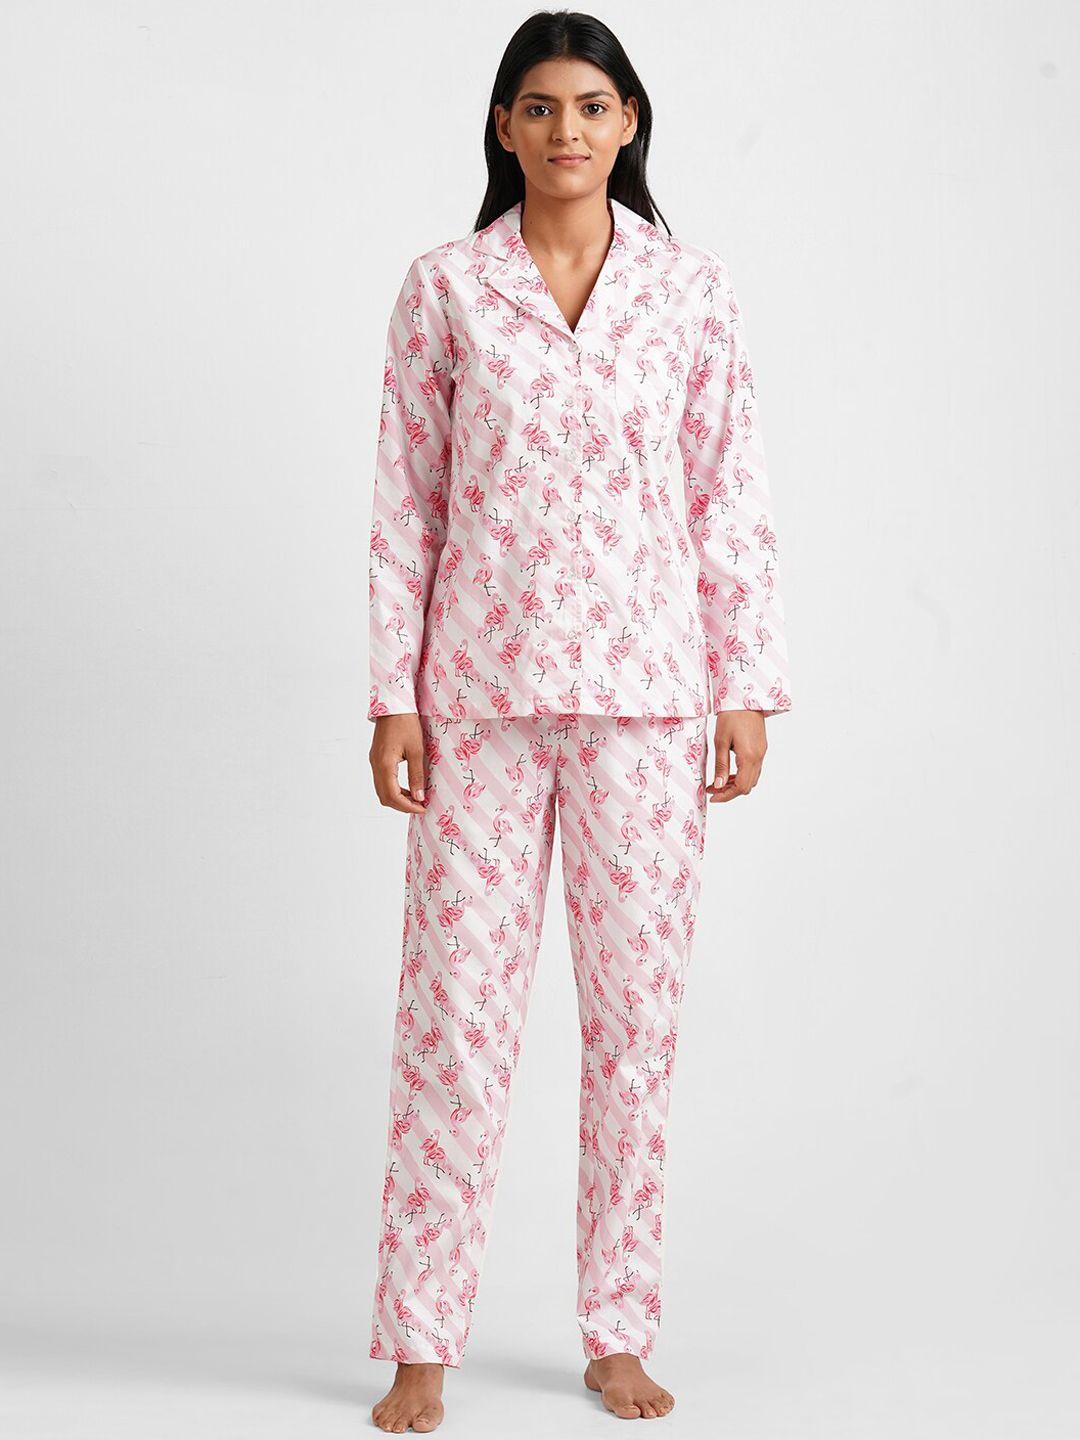 drape in vogue women pink printed night suit